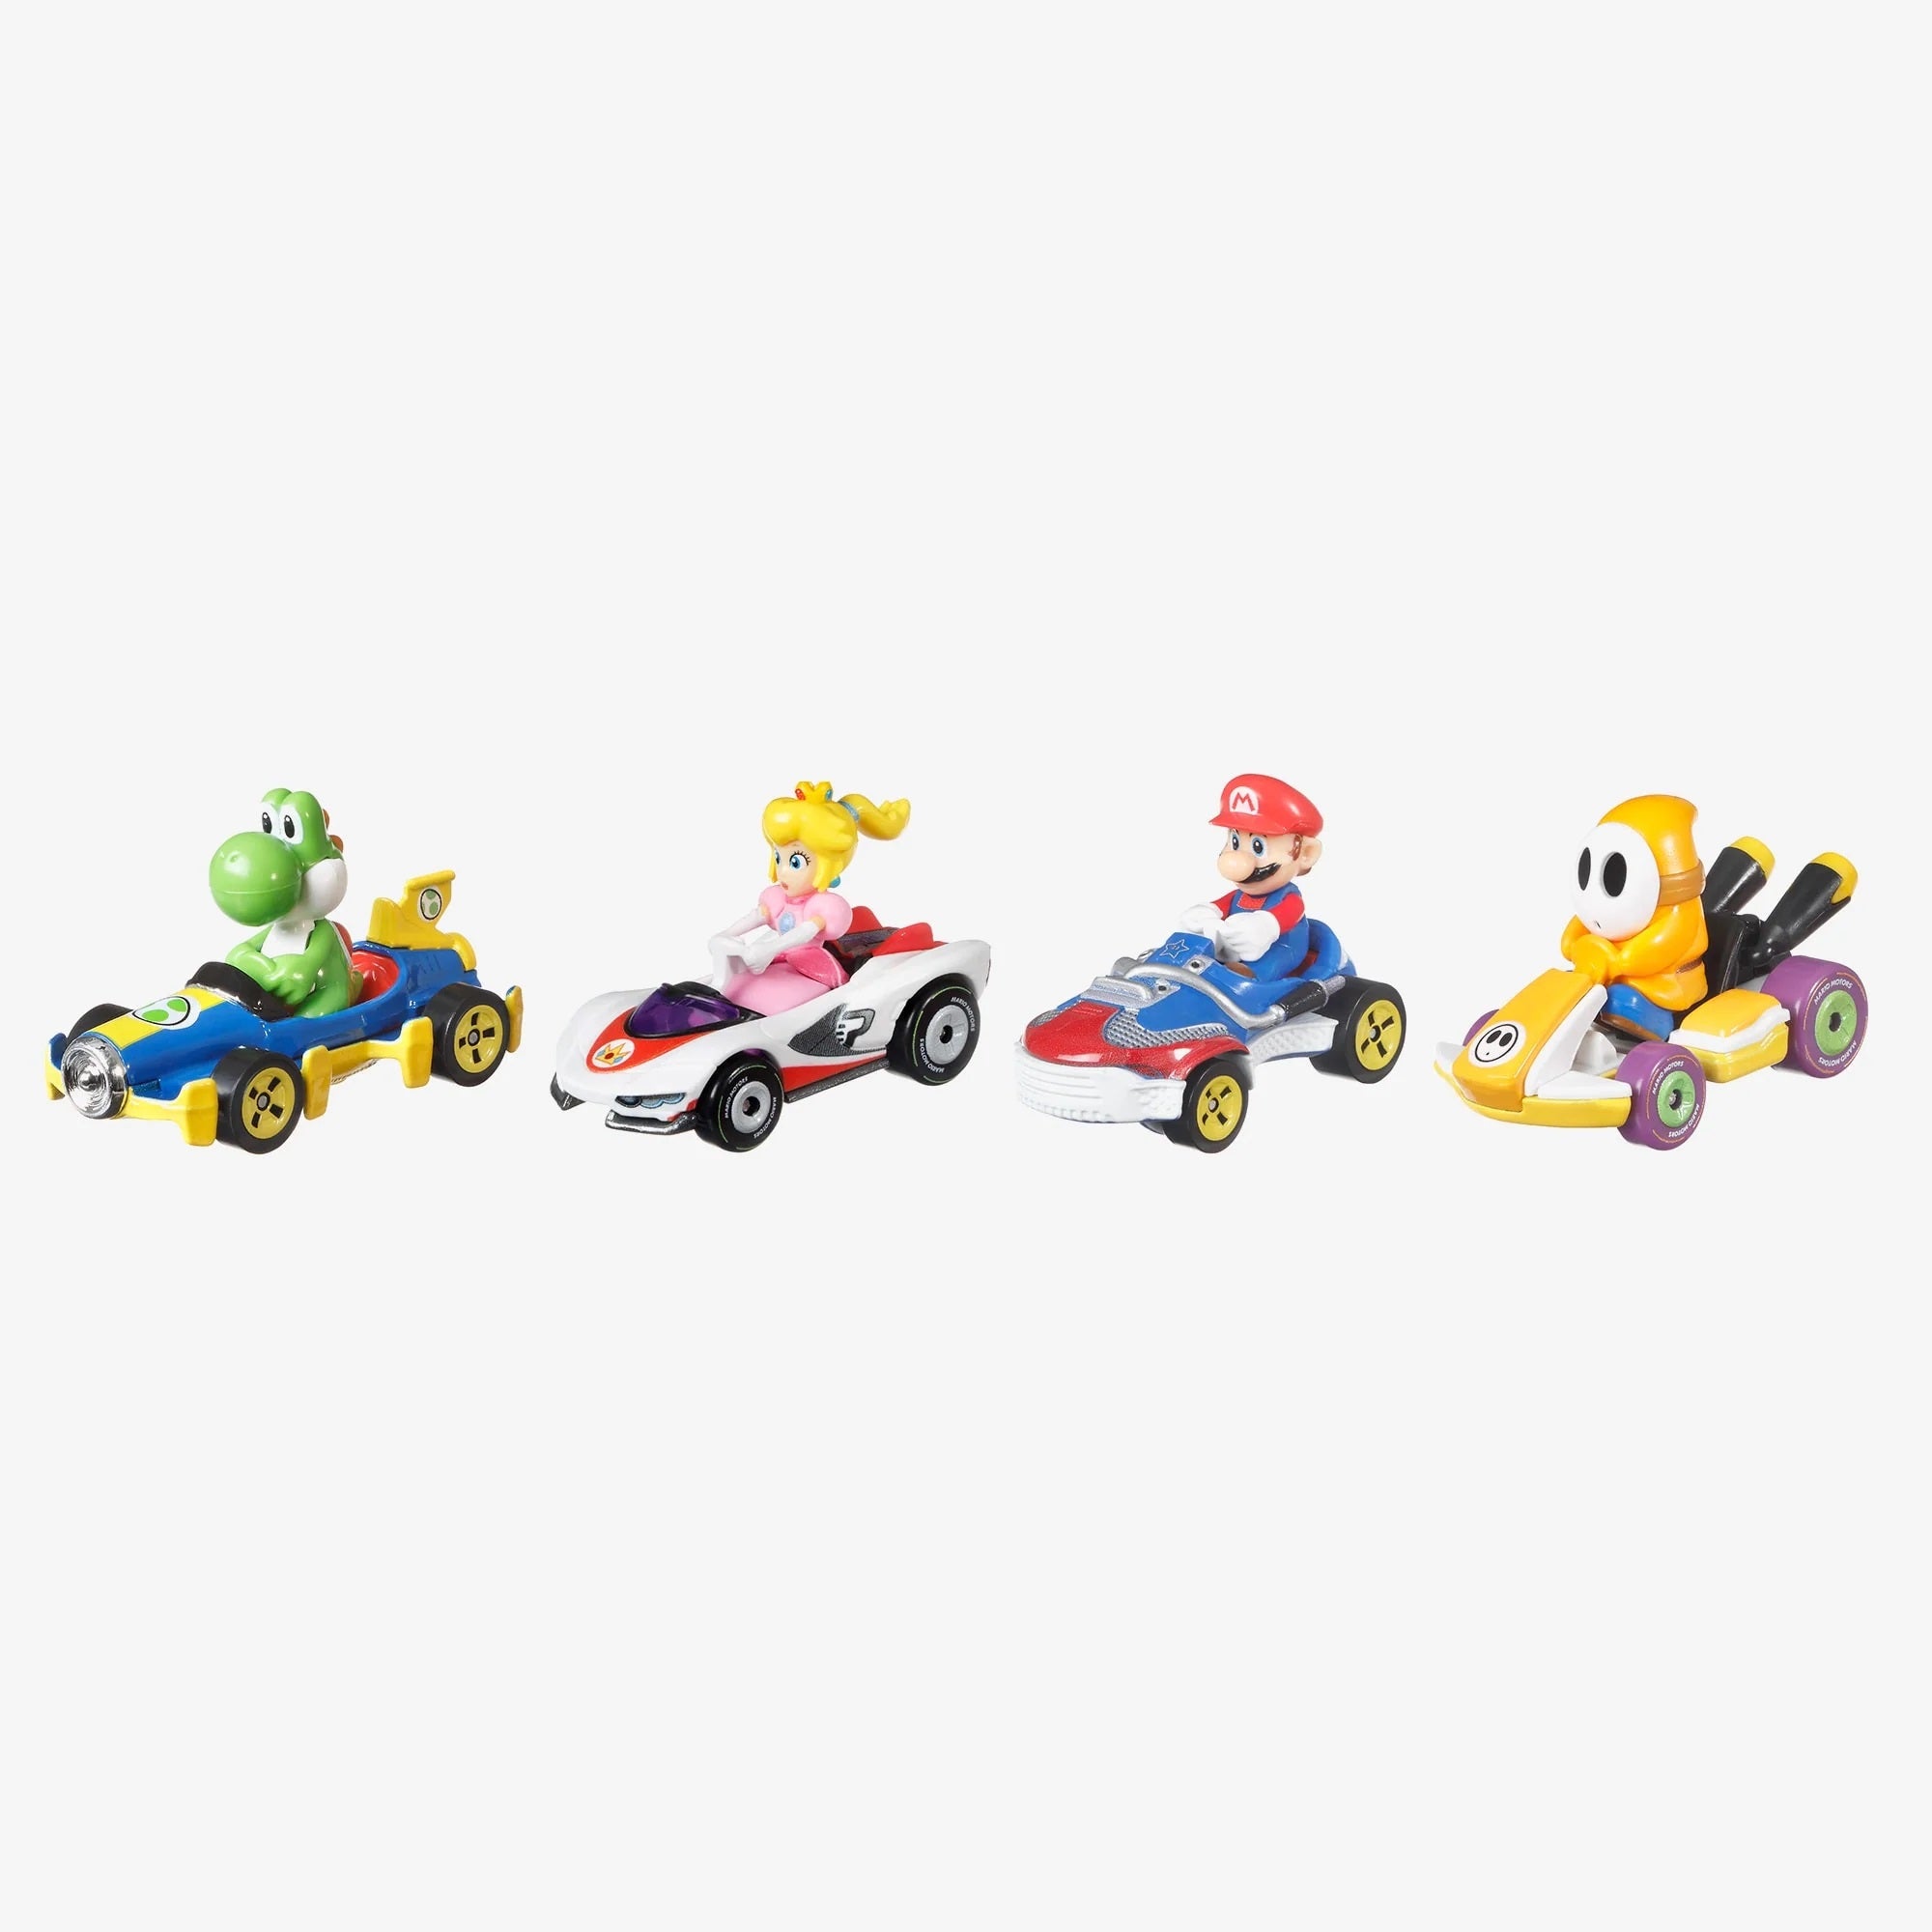 Hot Wheels Mario Kart Vehicle 4-Pack, Set of 4 Fan-Favorite Characters Includes 1 Exclusive Model Orange Shy Guy